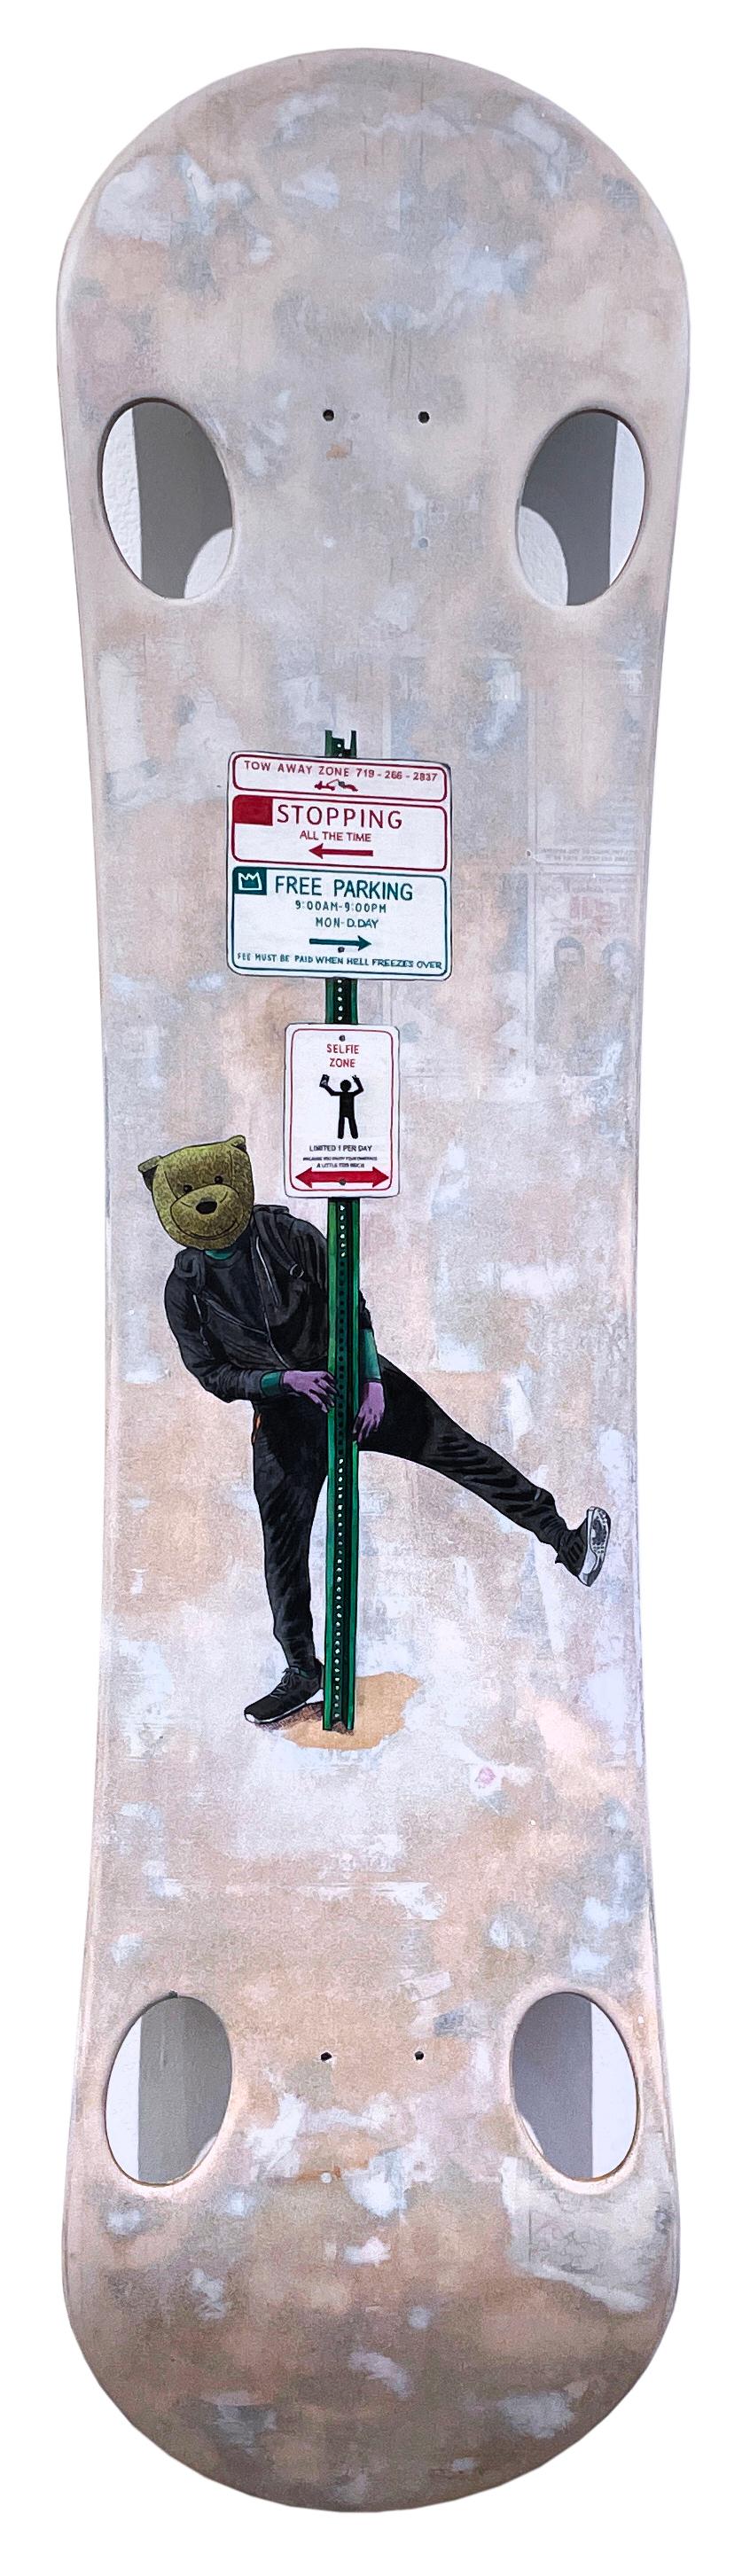 Sean 9 Lugo Figurative Painting - Selfie Zone, 2020, graffiti urban art mixed media wheatpaste skateboard, bear